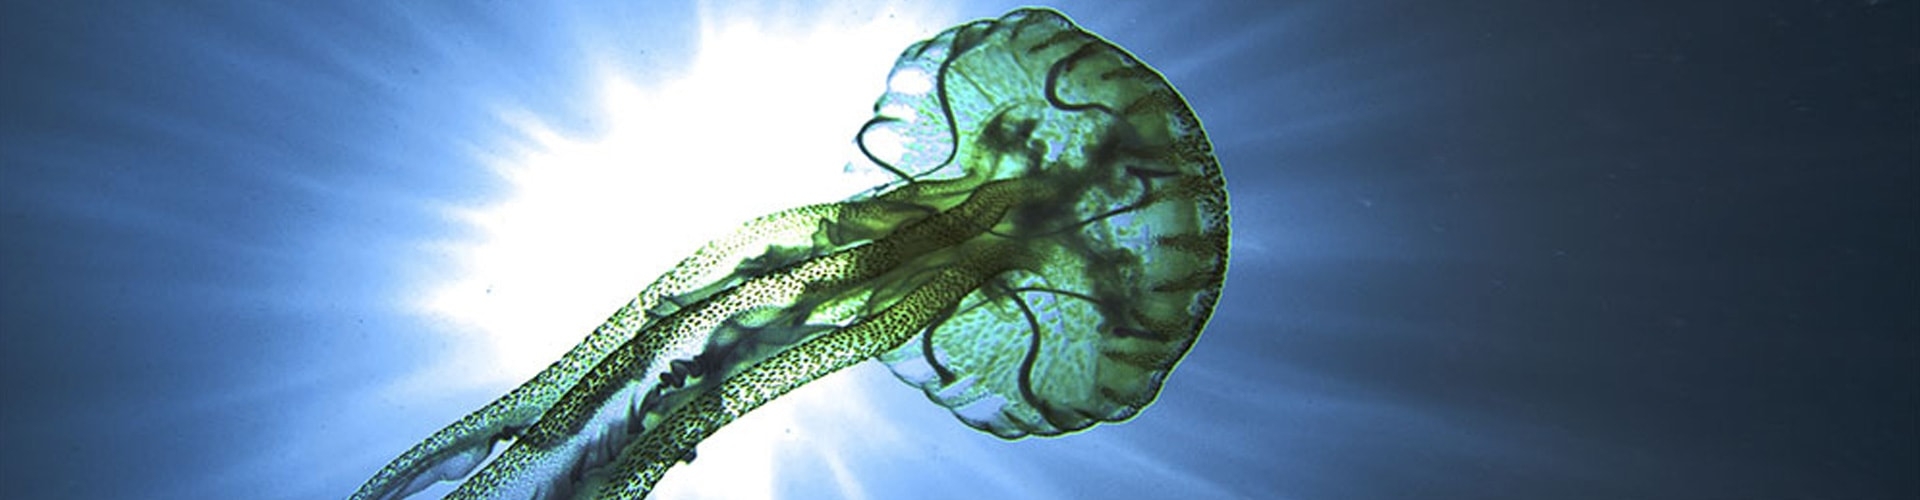 immagine medusa